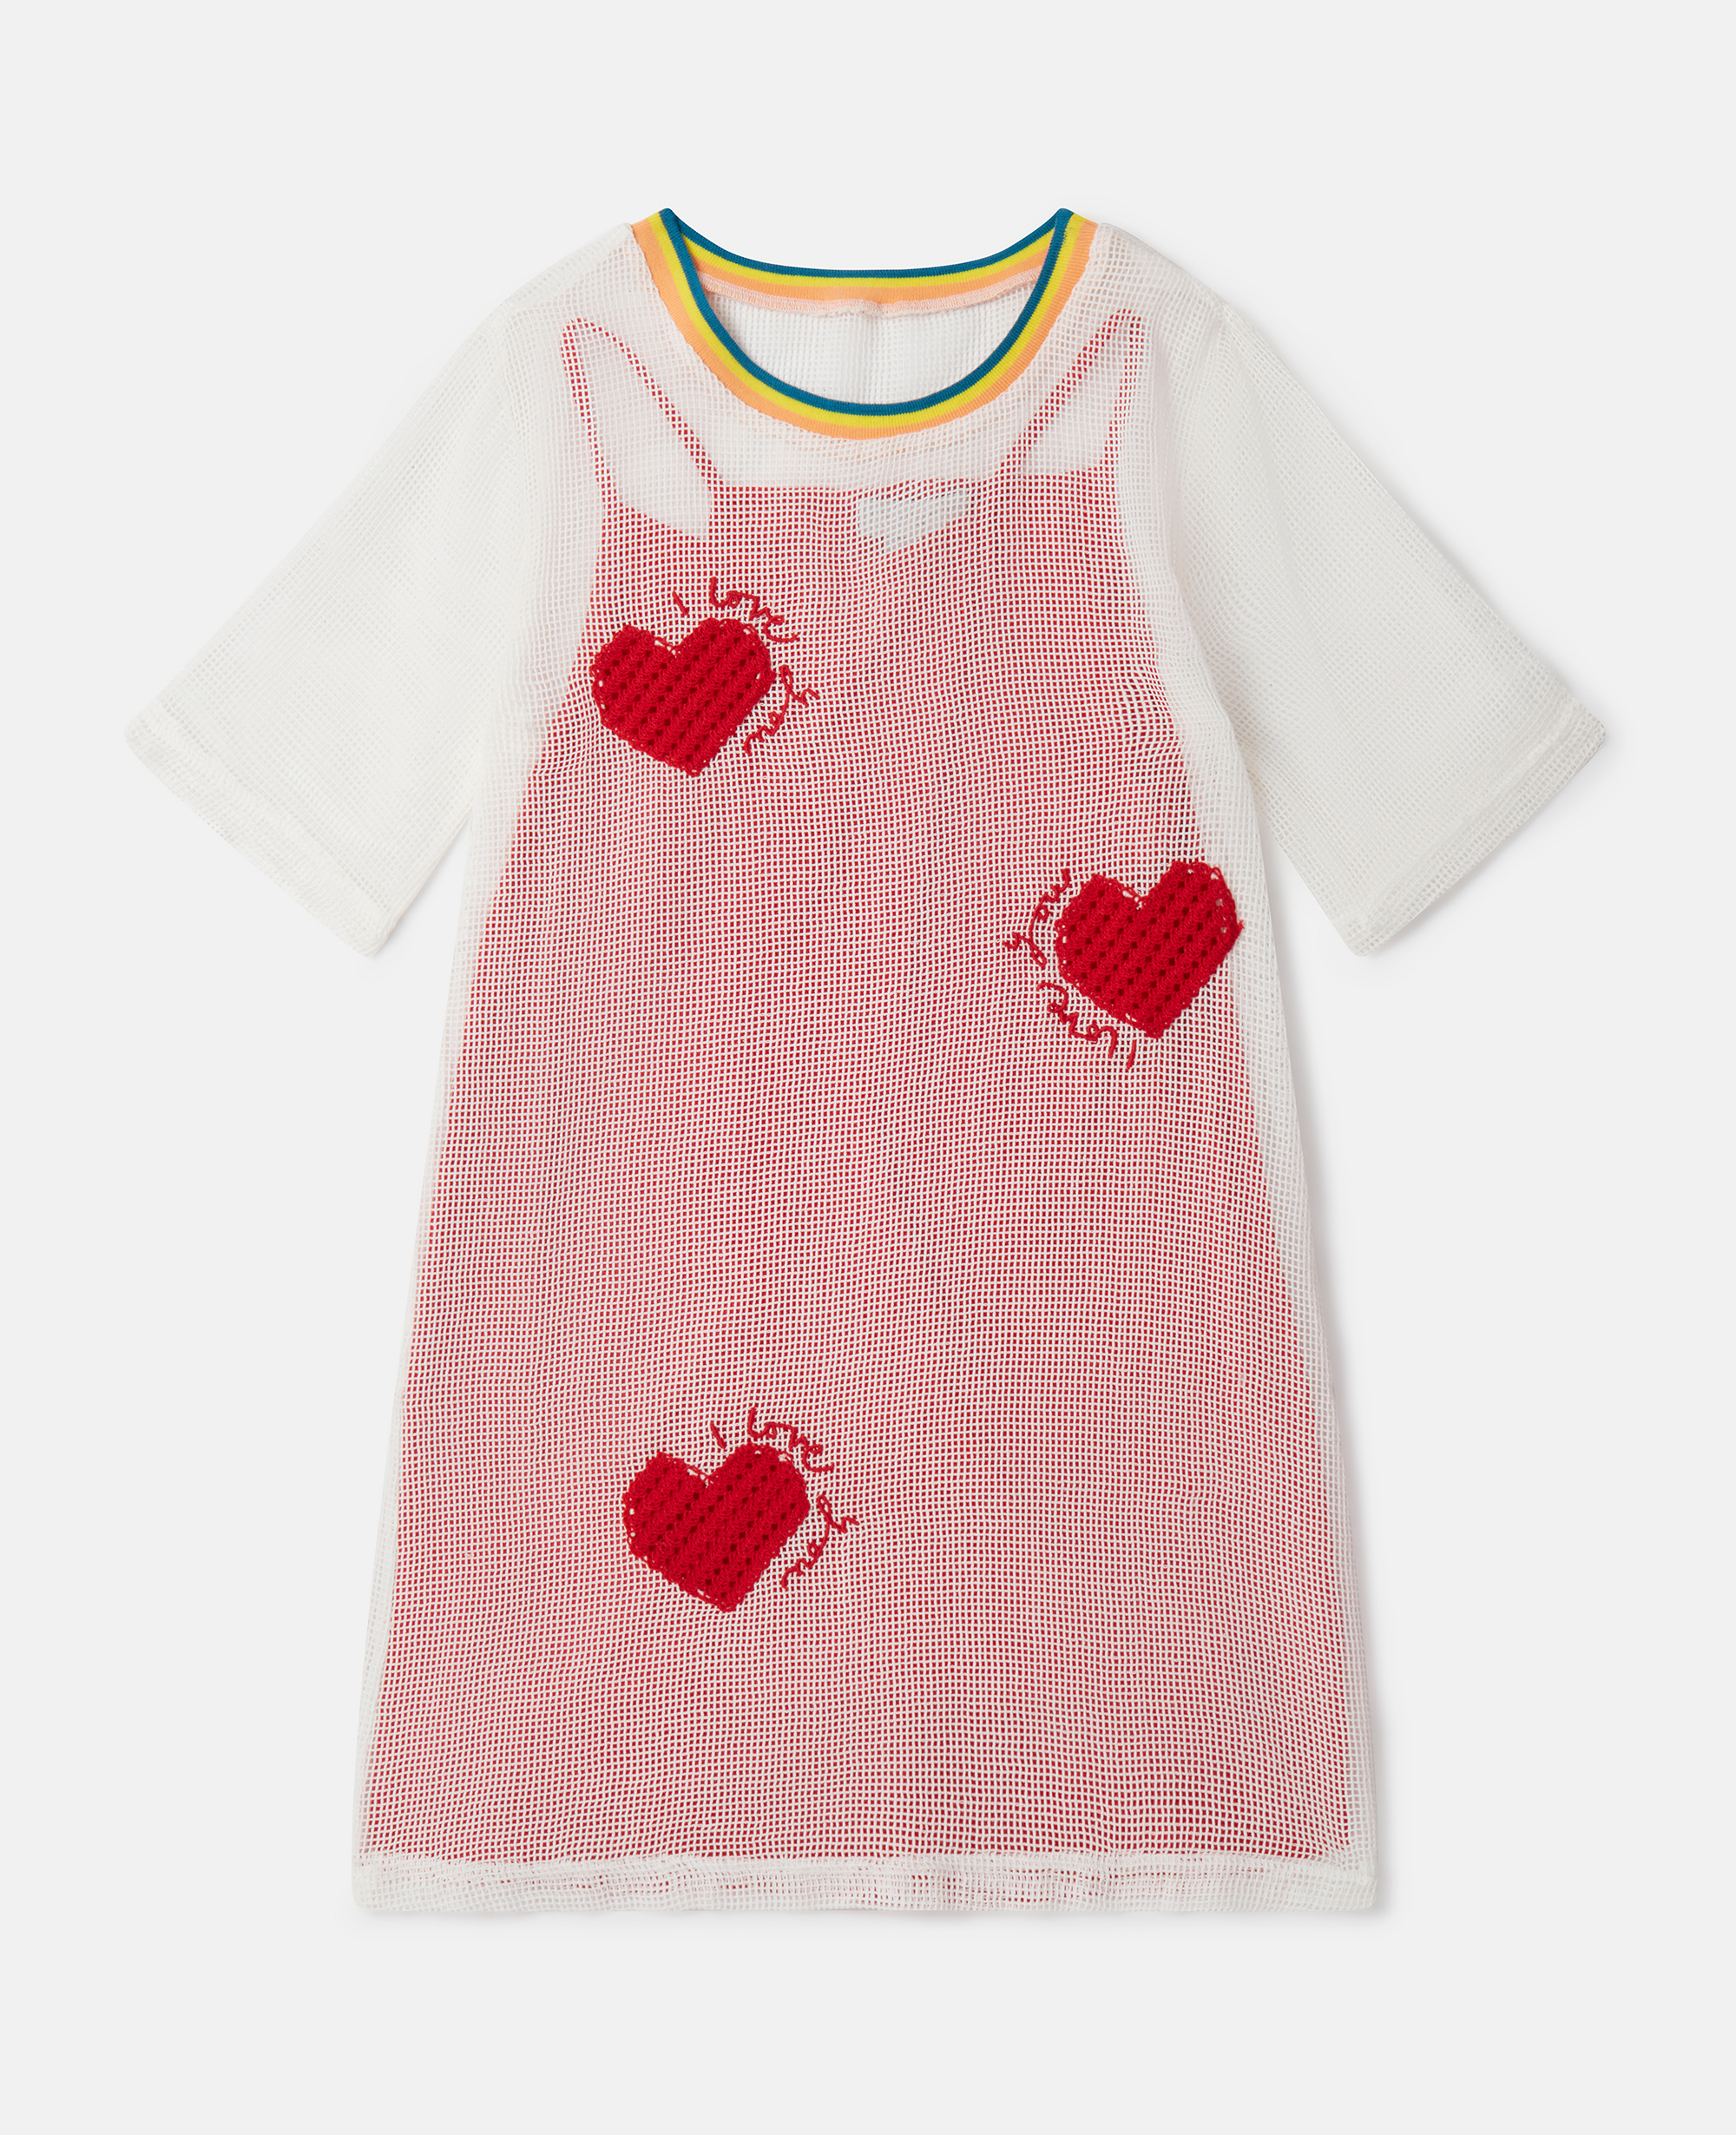 stella mccartney - robe t-shirt en mesh avec caurs, multicolore, taille: 8